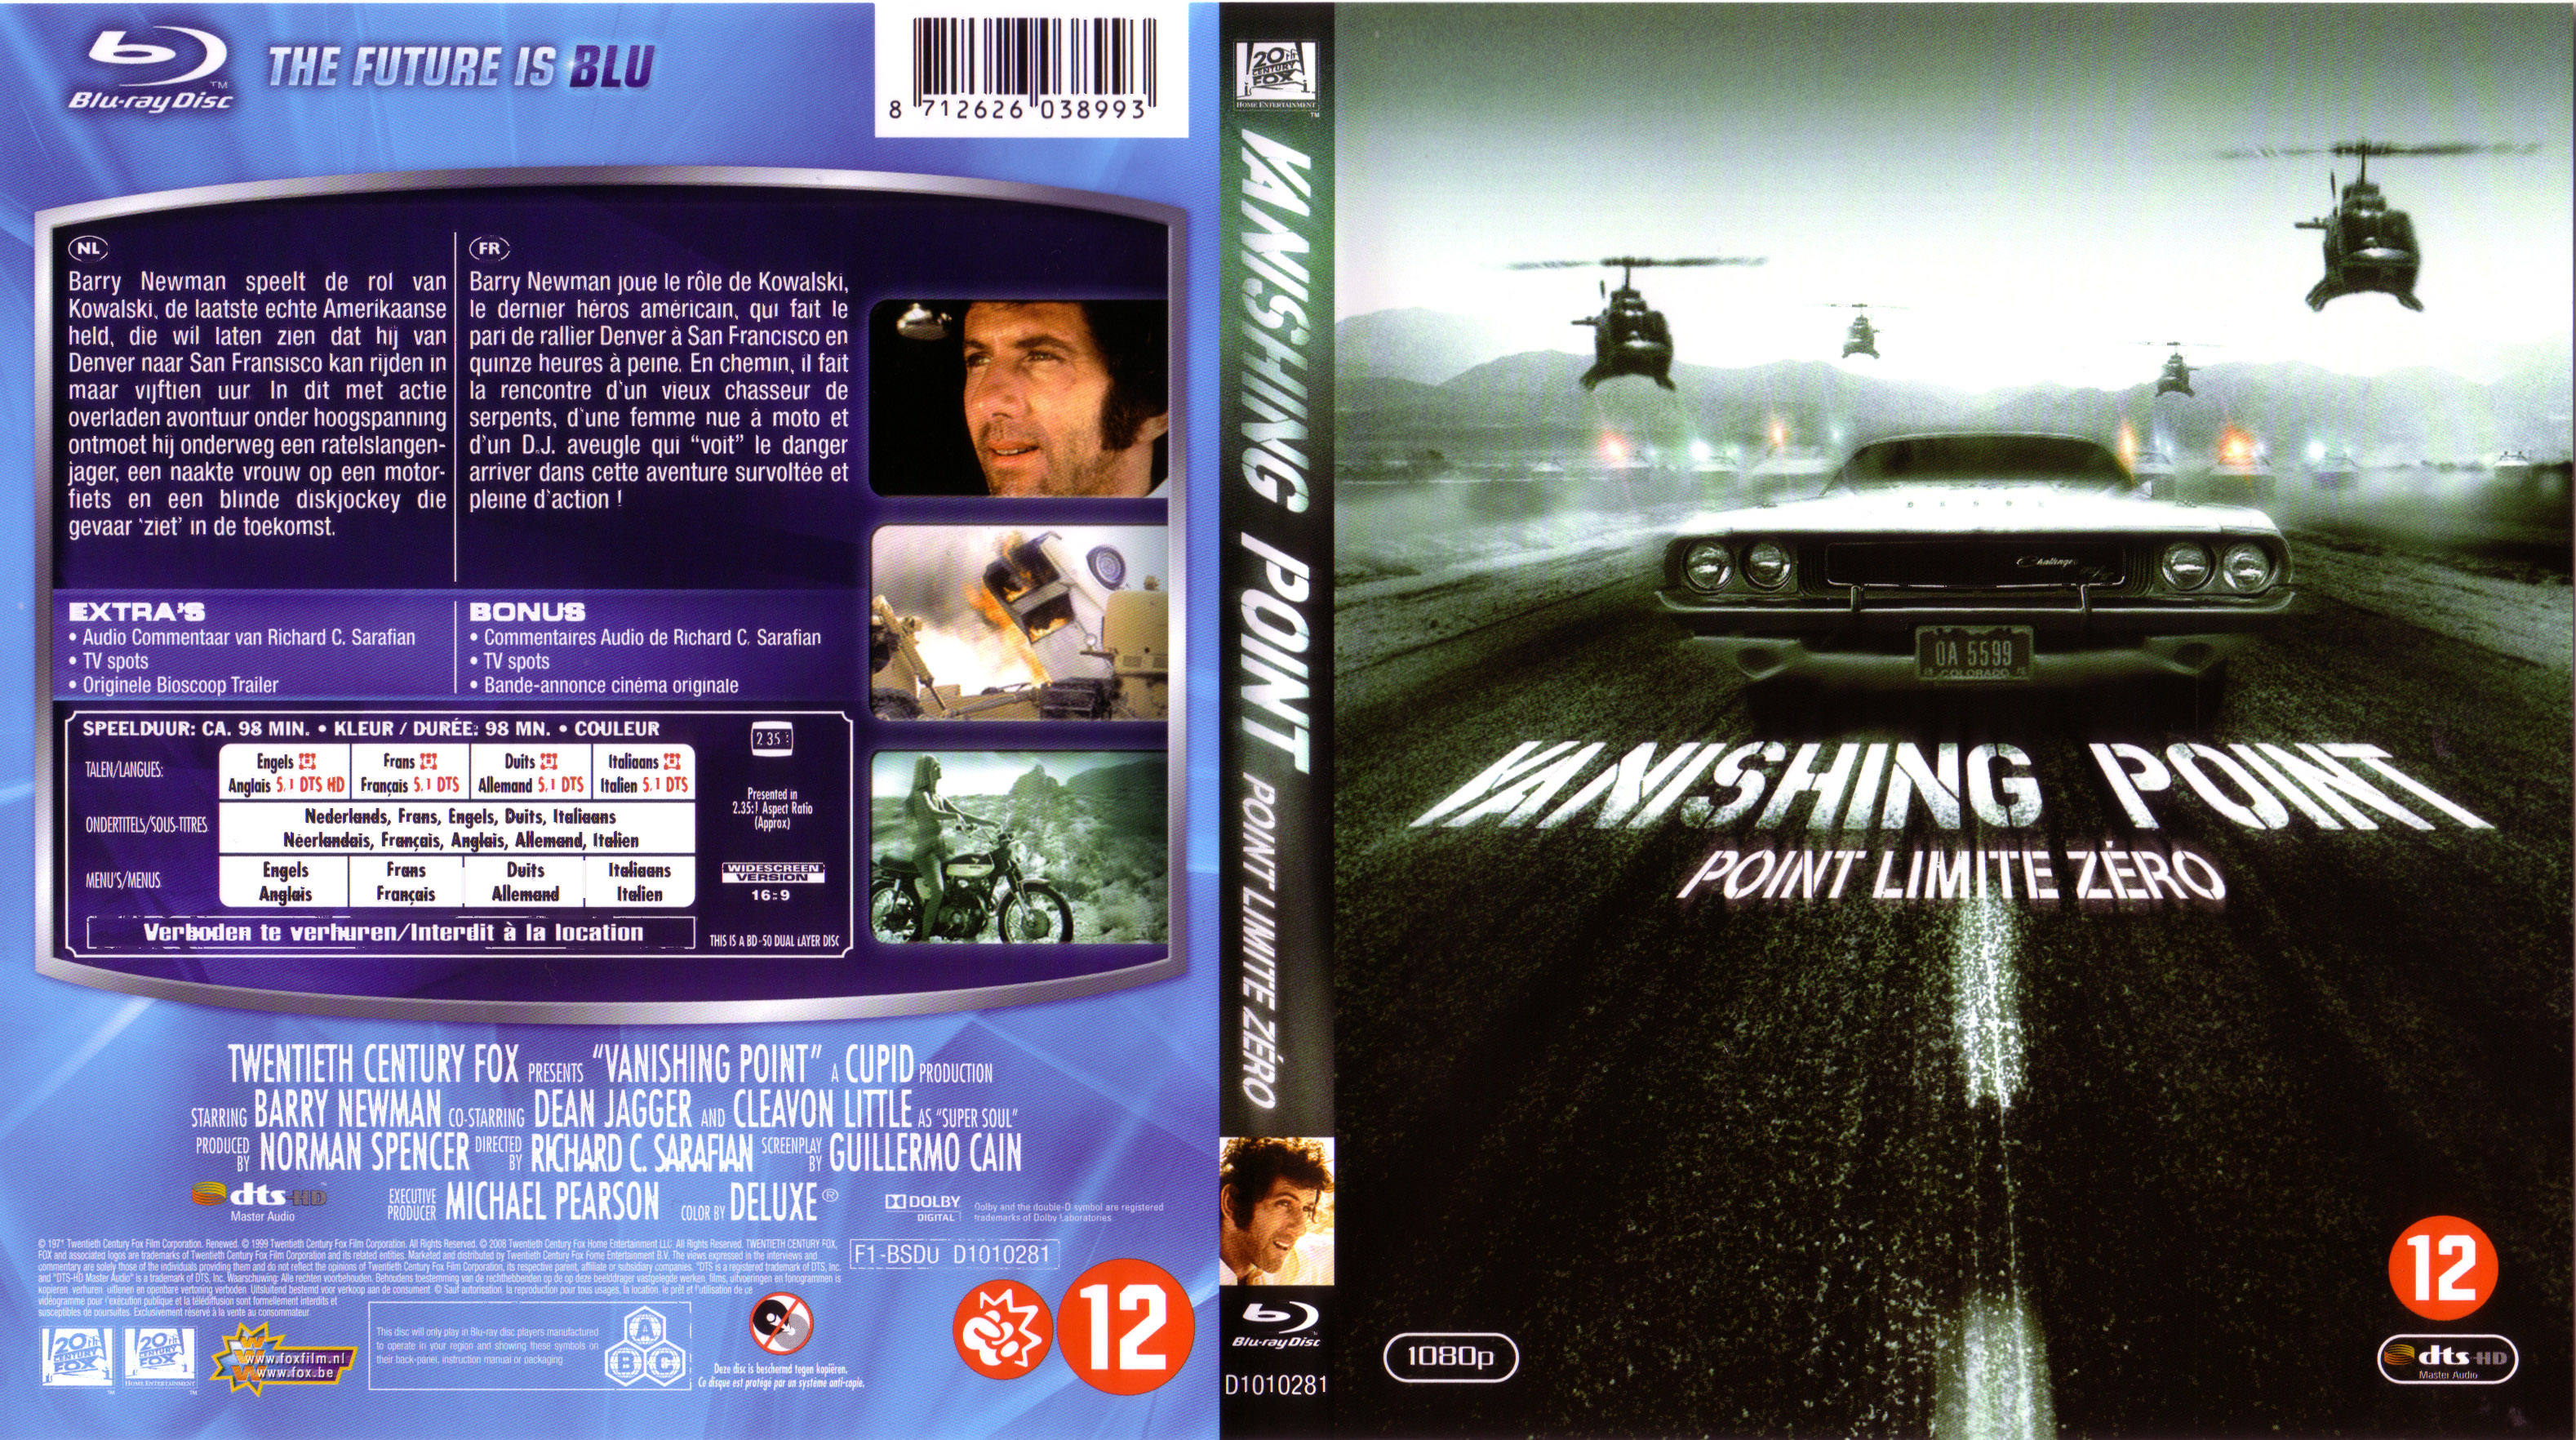 Jaquette DVD Point limite zero (BLU-RAY)